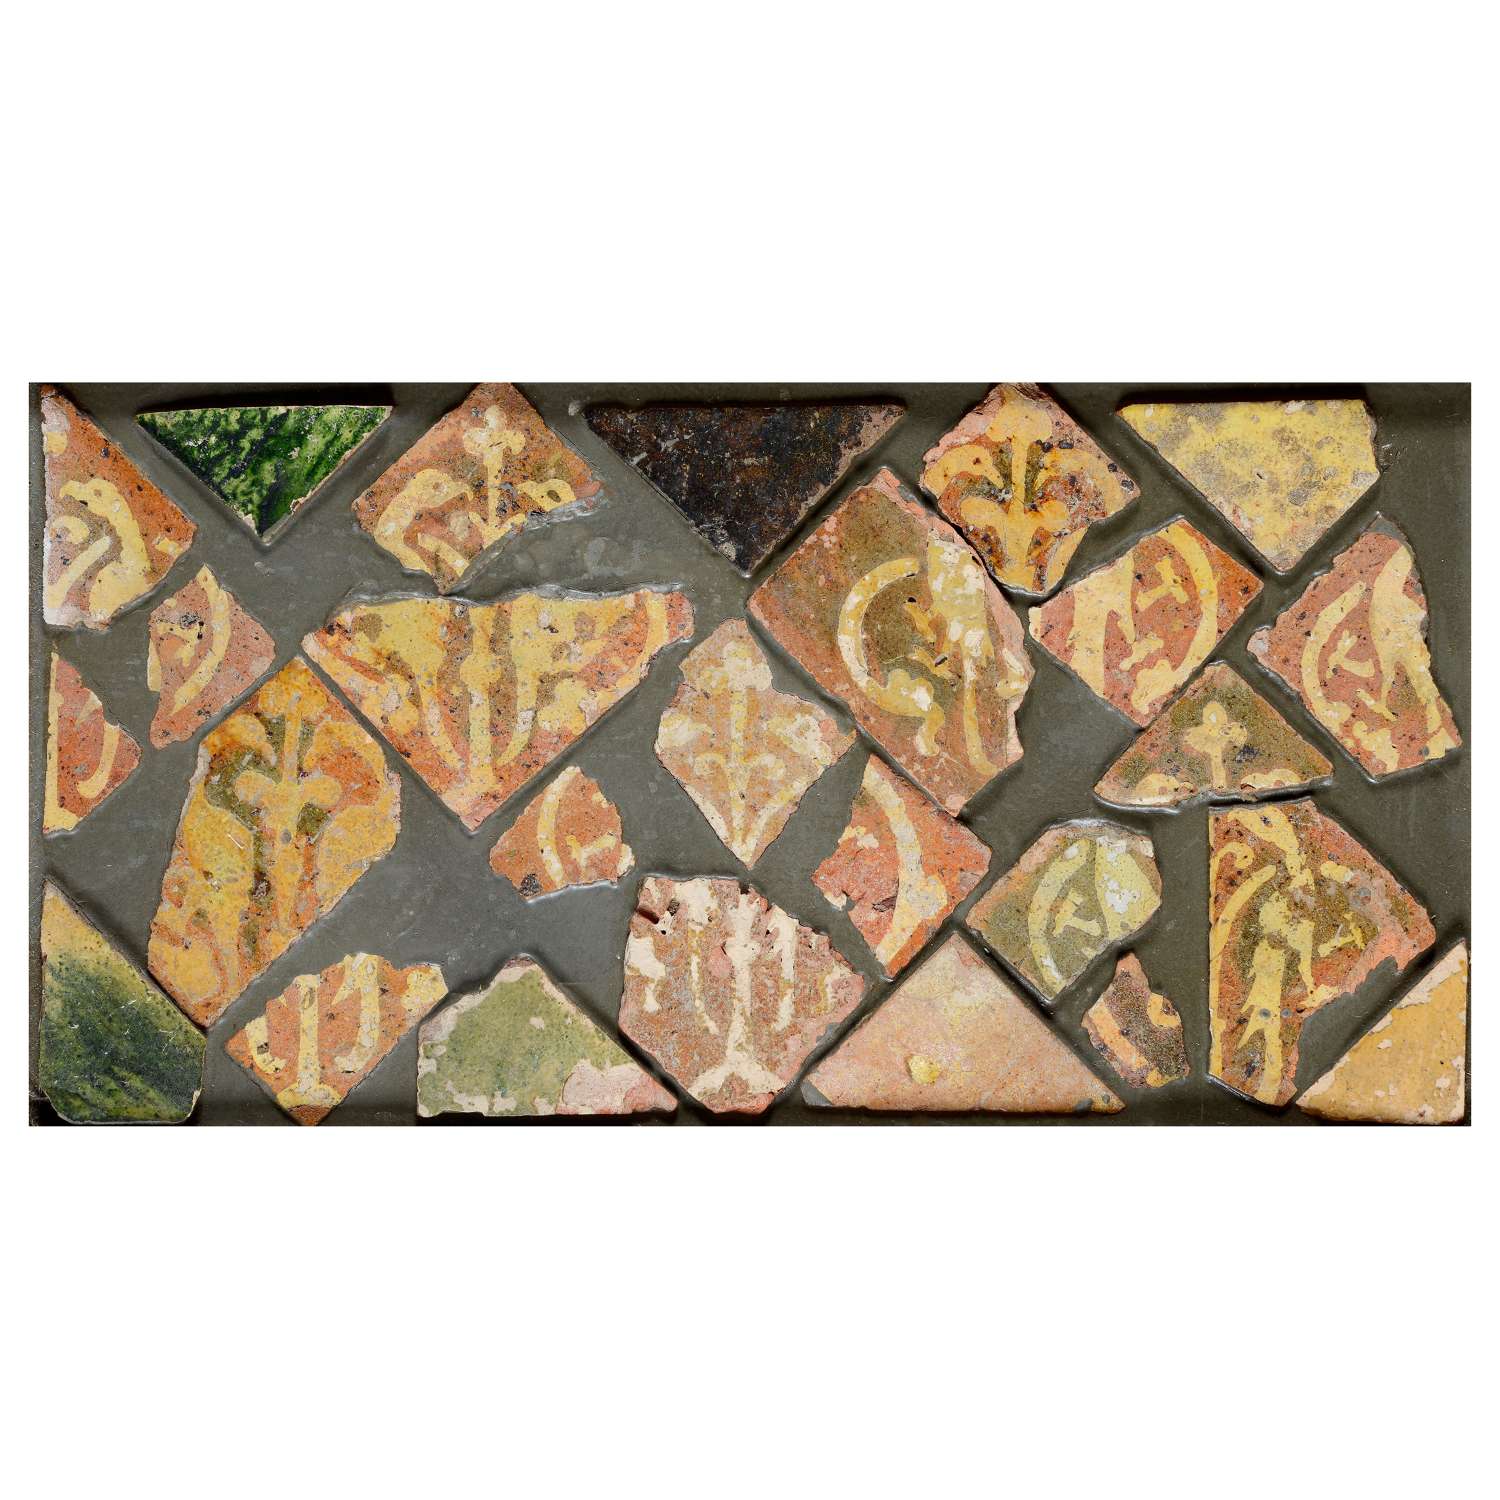 Medieval Encaustic Tile Fragments